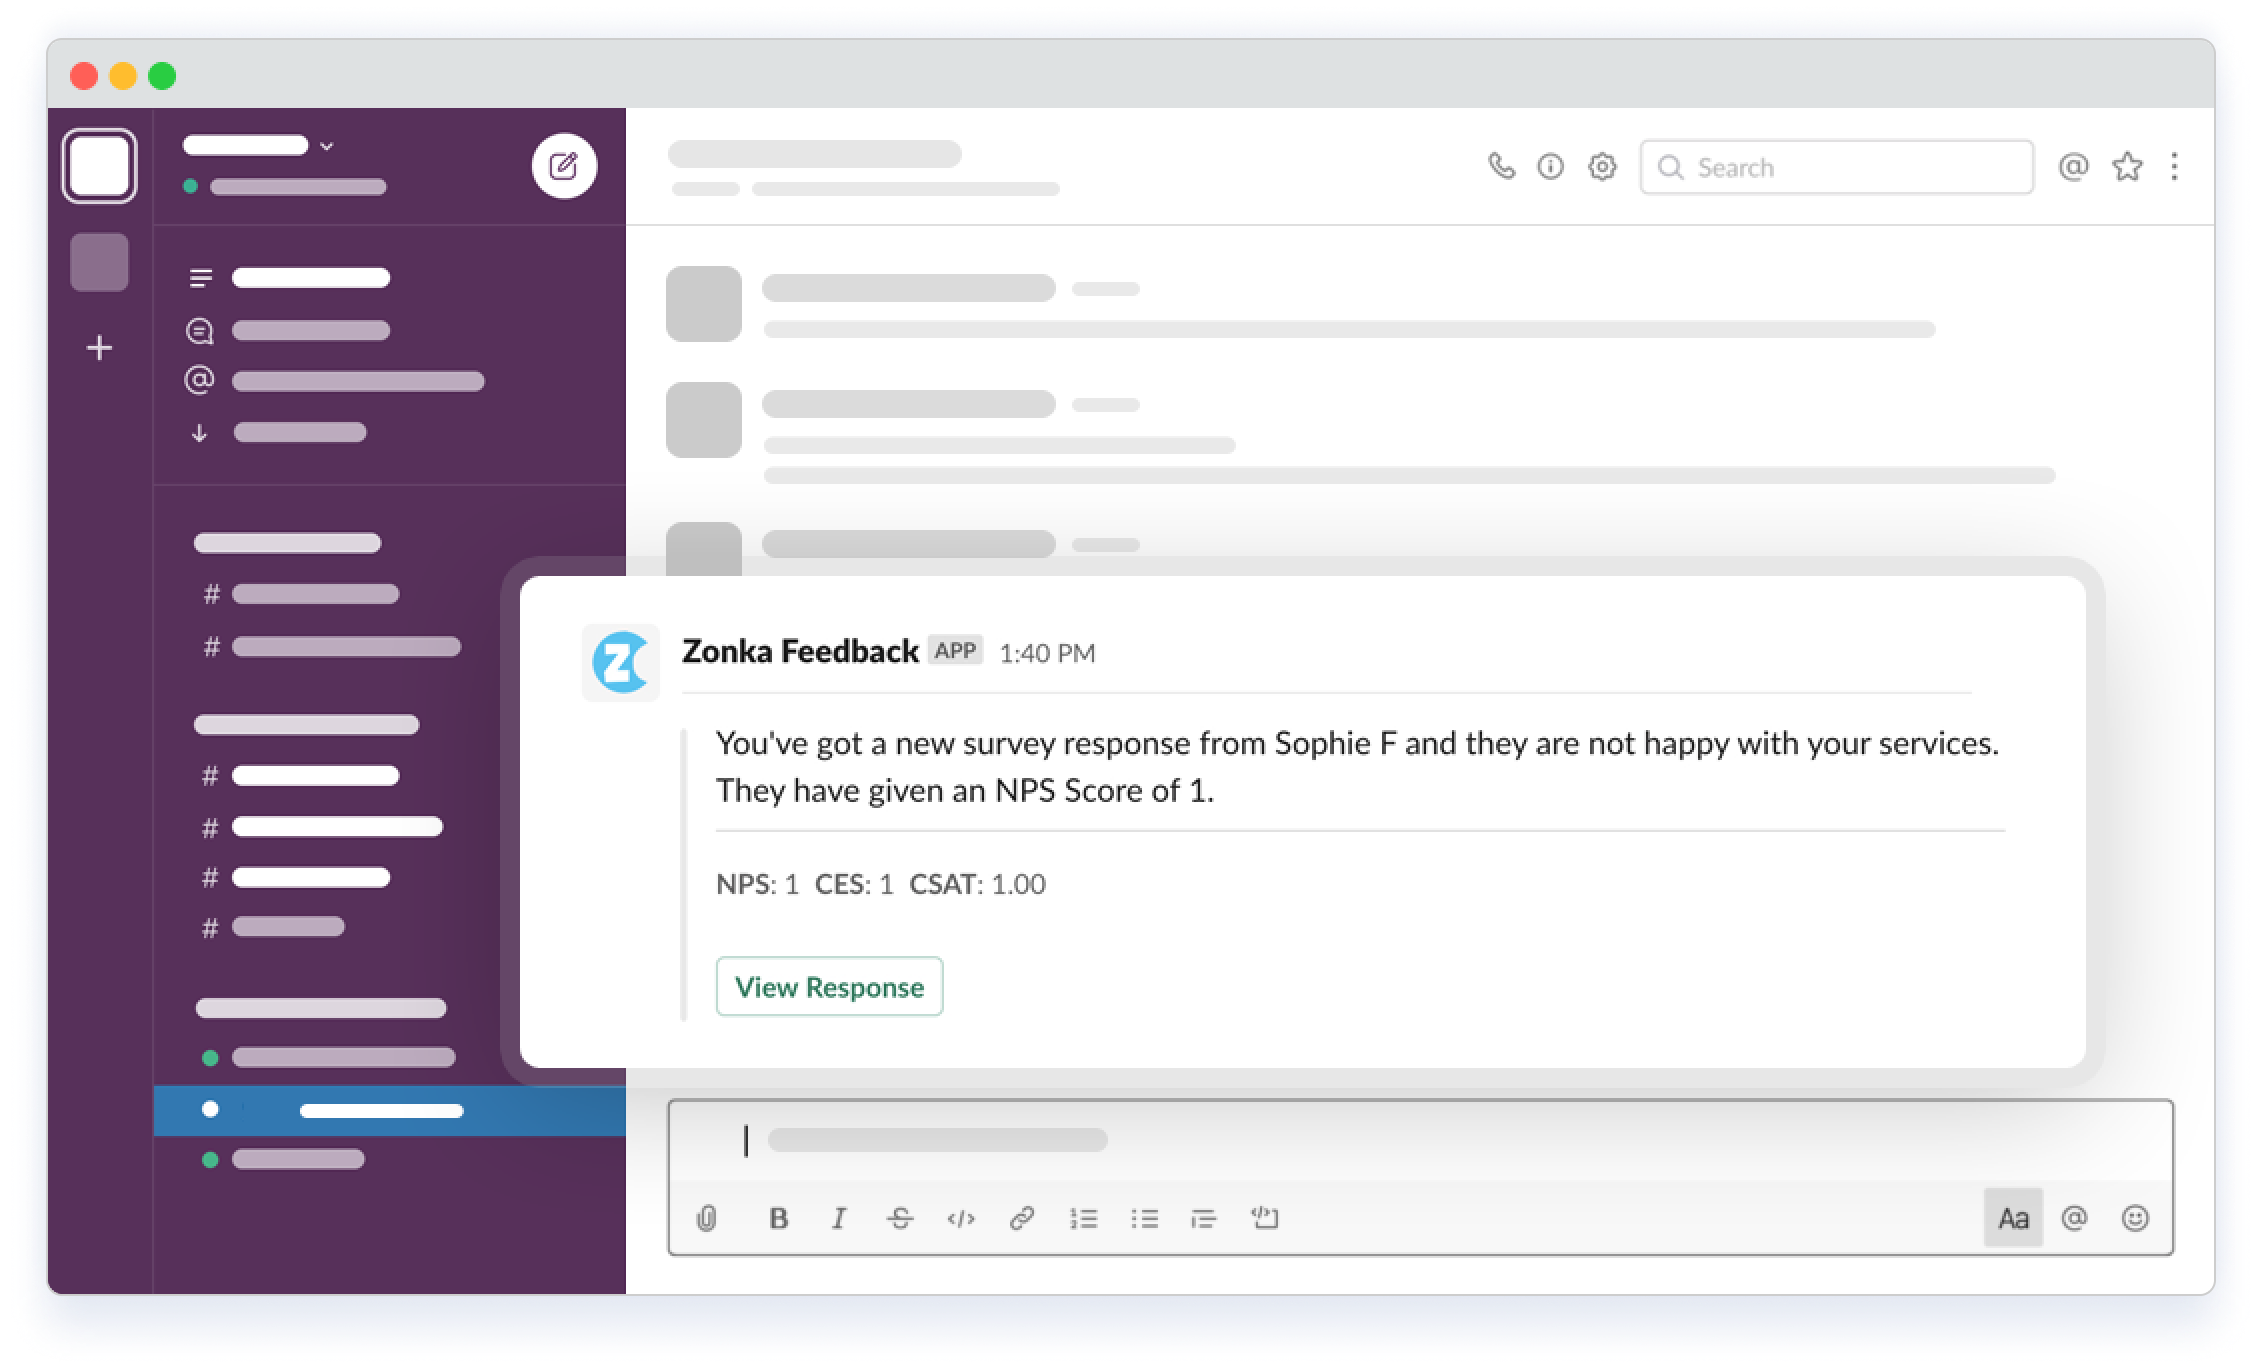 Real time notification alert in Slack using a customer feedback tool